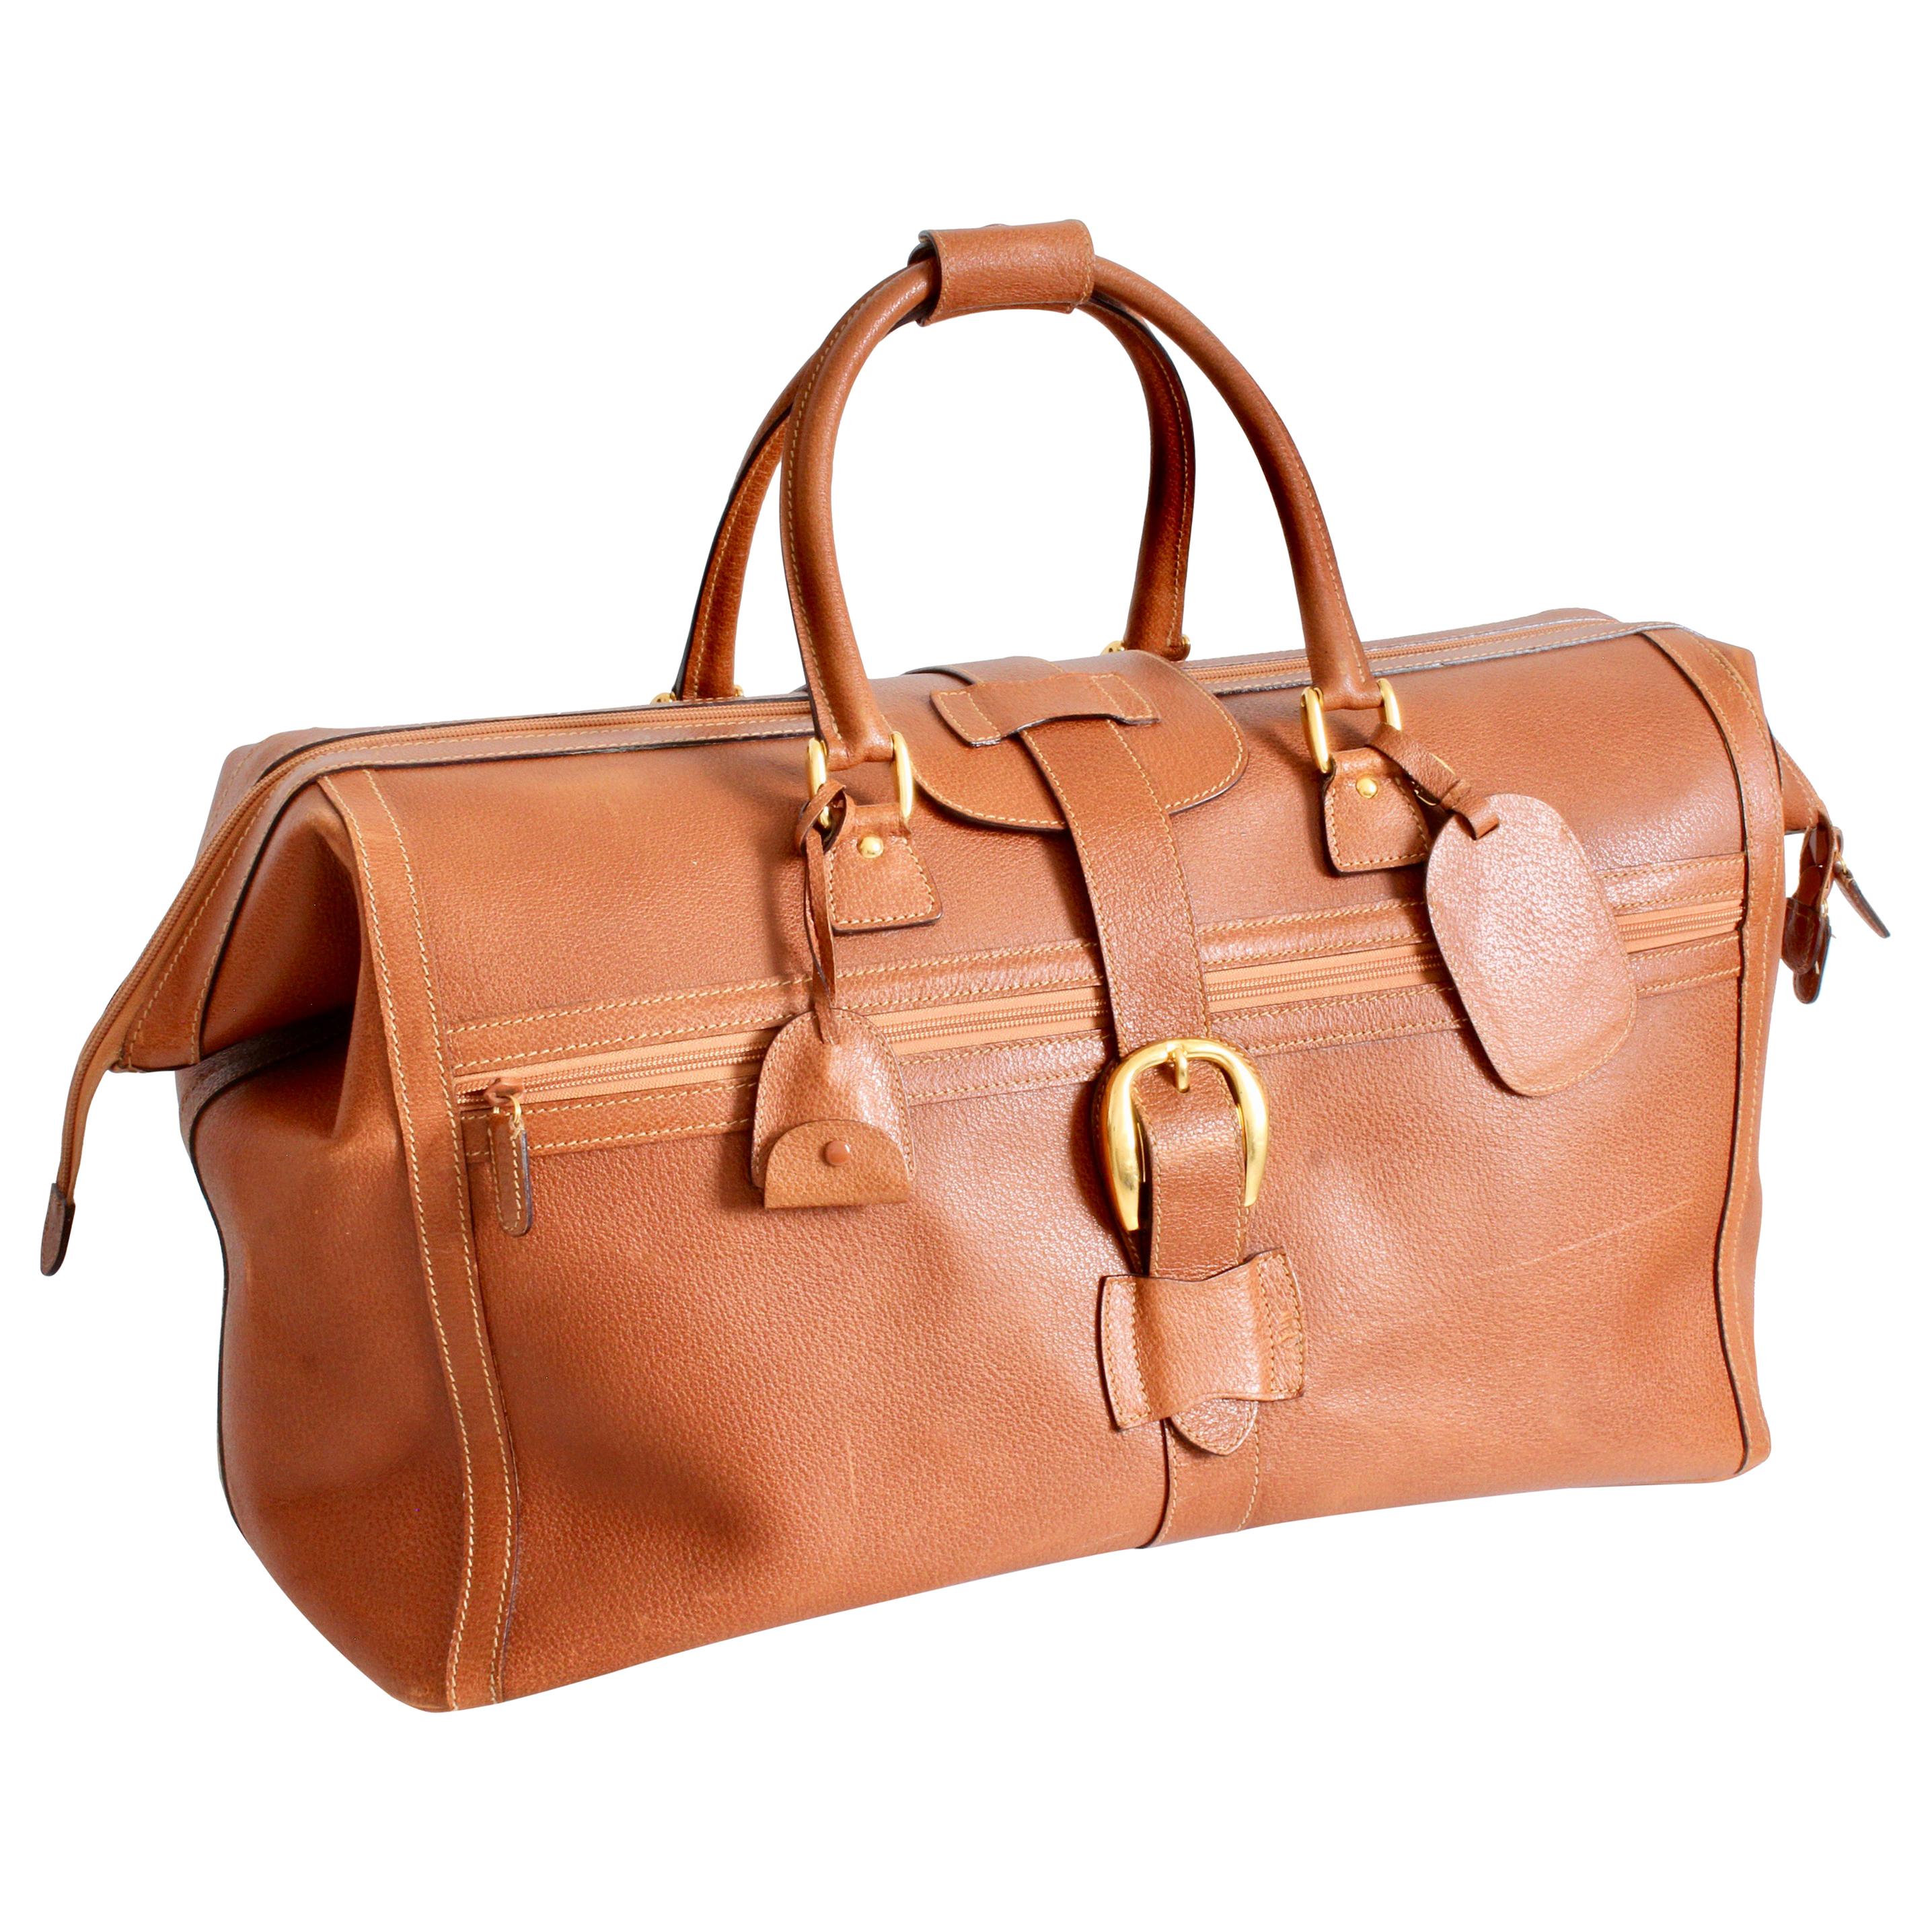 Gucci Large Duffel Travel Bag Pigskin Leather Luggage Rare 65cm 